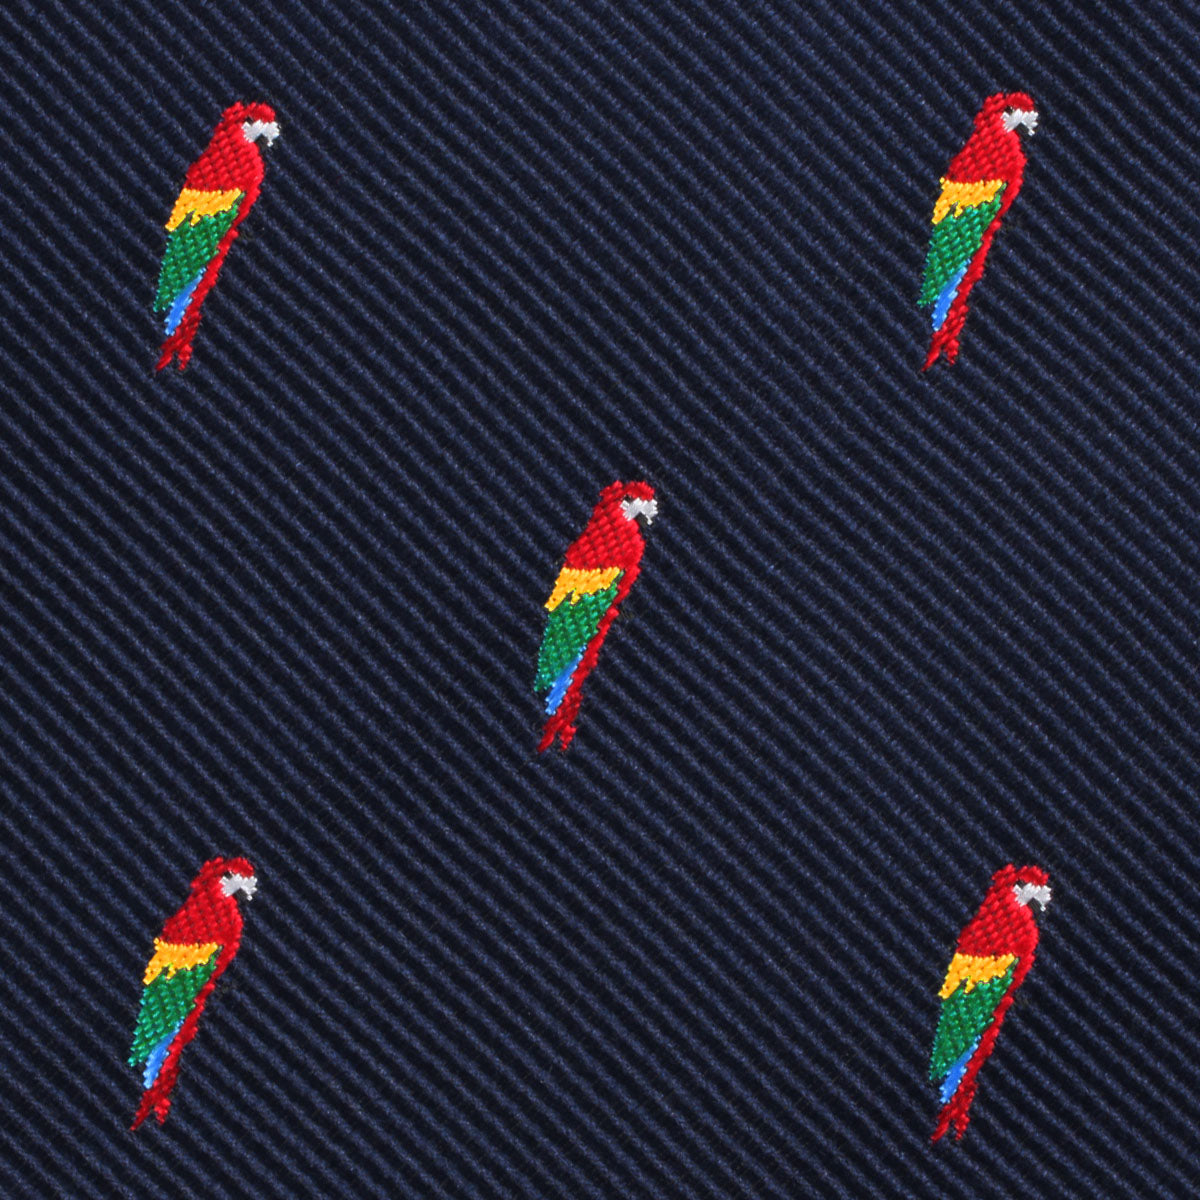 Rainbow Parrot Skinny Tie Fabric